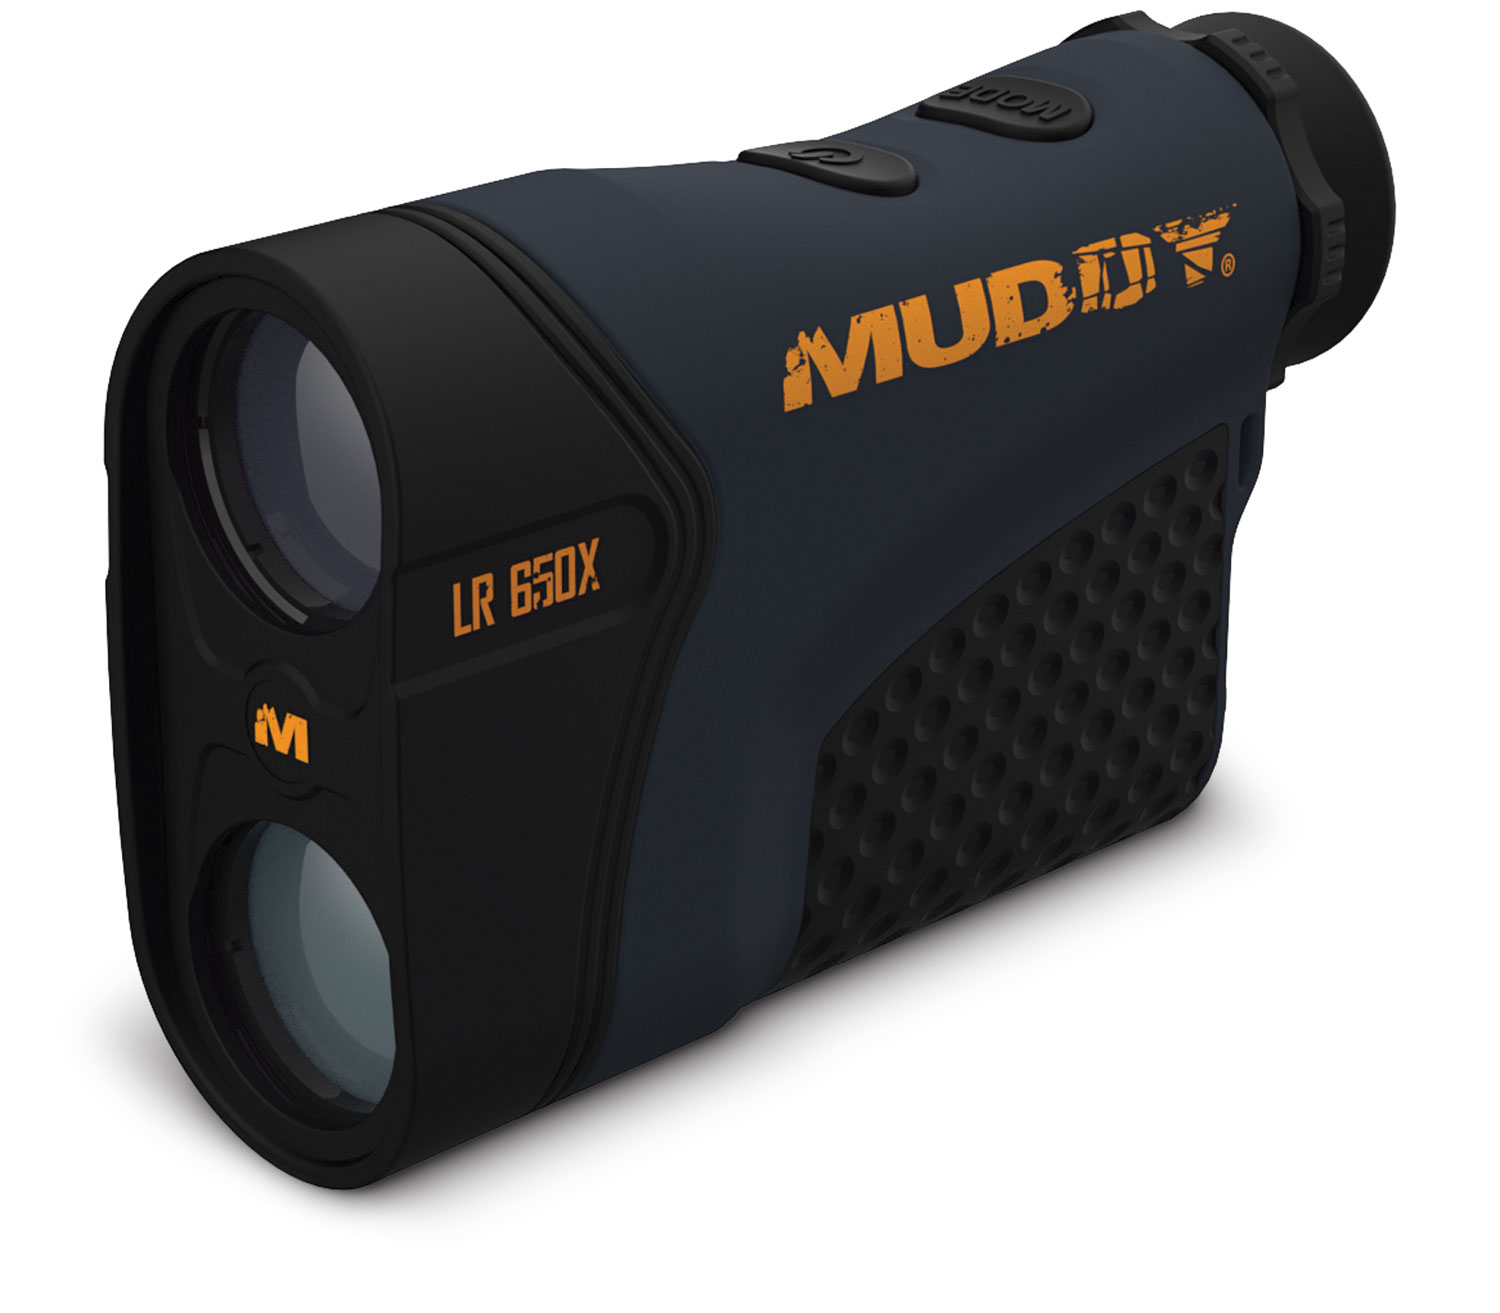 Muddy MUDLR650X 650 W HD Black Rubber Armor 6x26mm 650 yds Max Distance-img-0